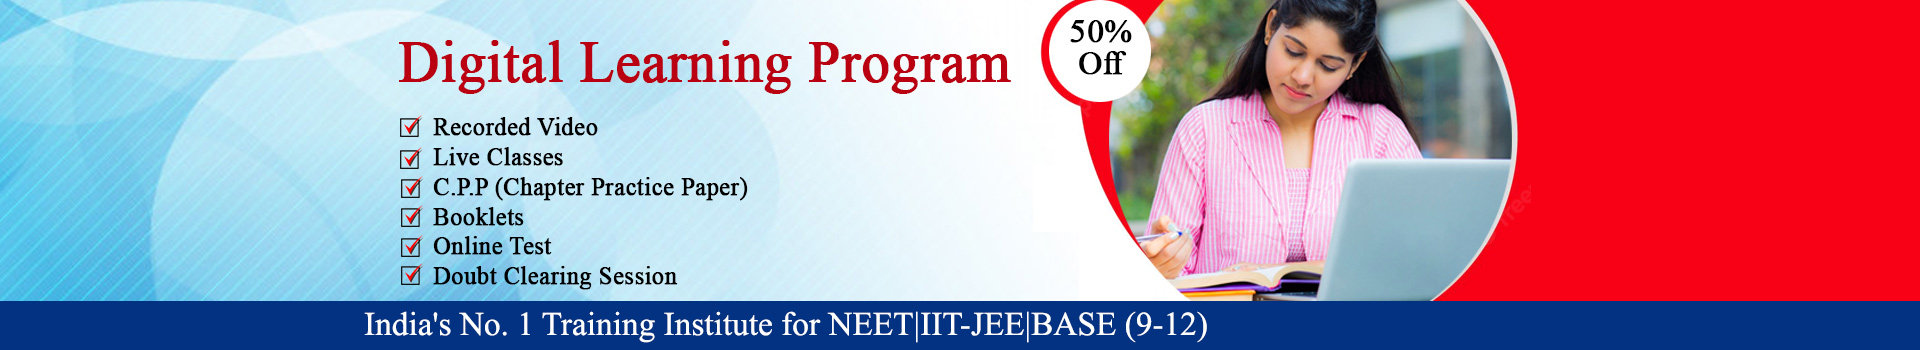 digital learing-program for neet iit jee main|advanced